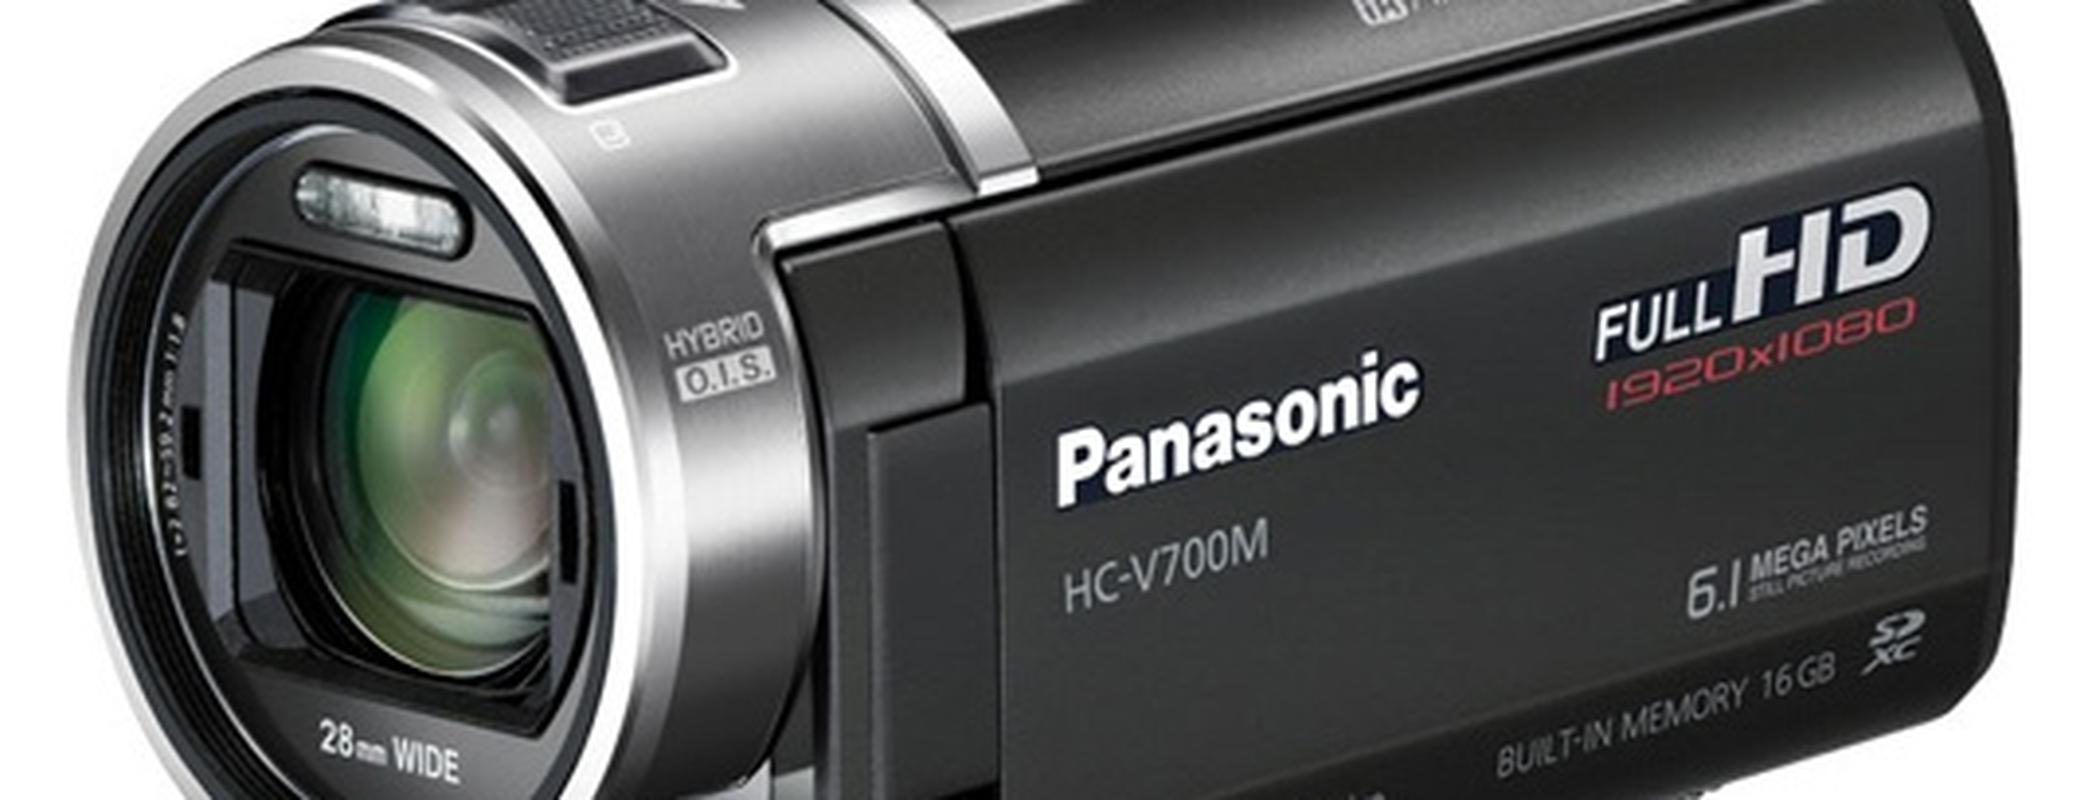 Shoot Great Video with Panasonic HC-V700